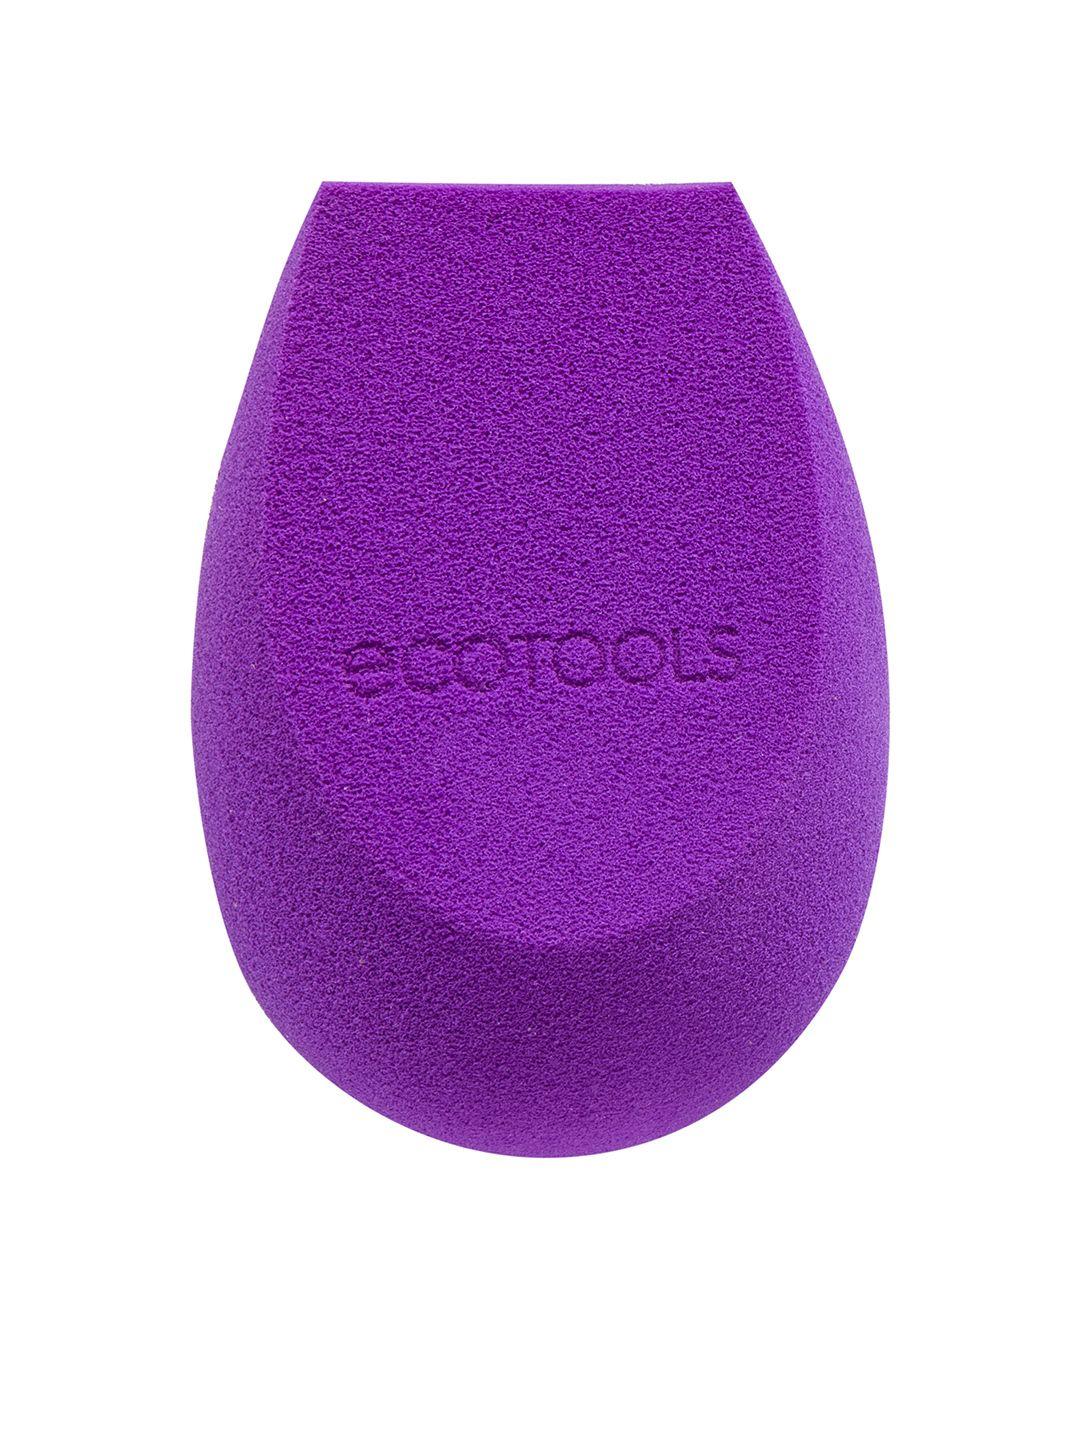 ecotools bioblender makeup sponge - purple